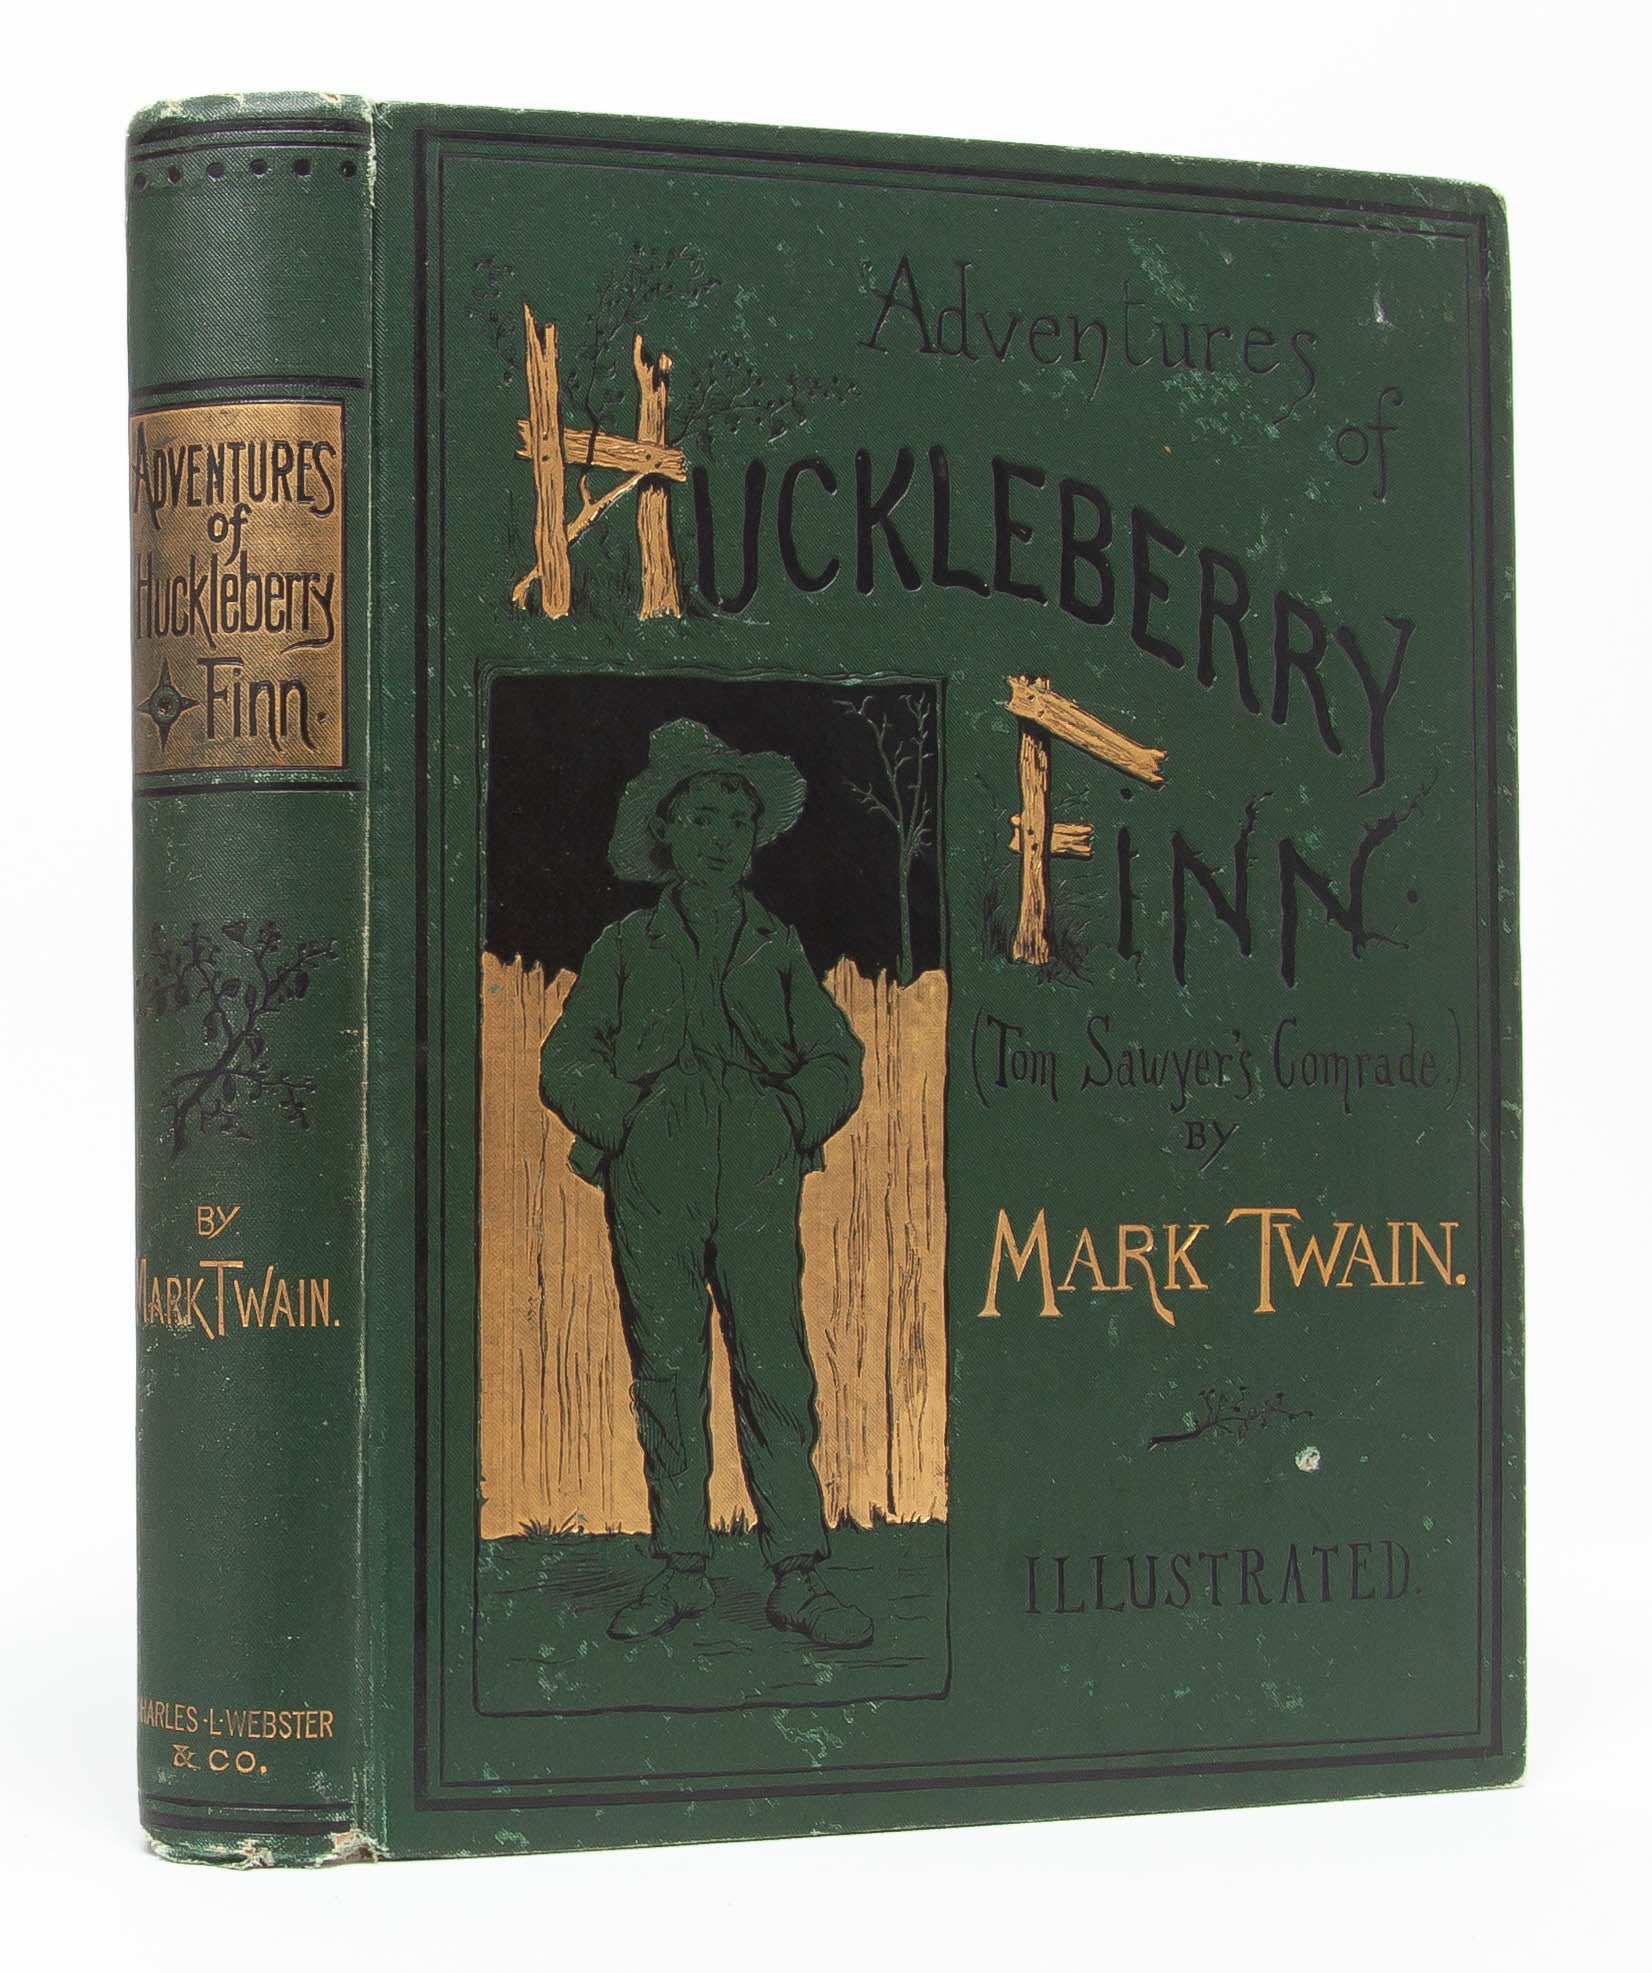 (Item #5647) Adventures of Huckleberry Finn. Mark Twain, Samuel L. Clemens.